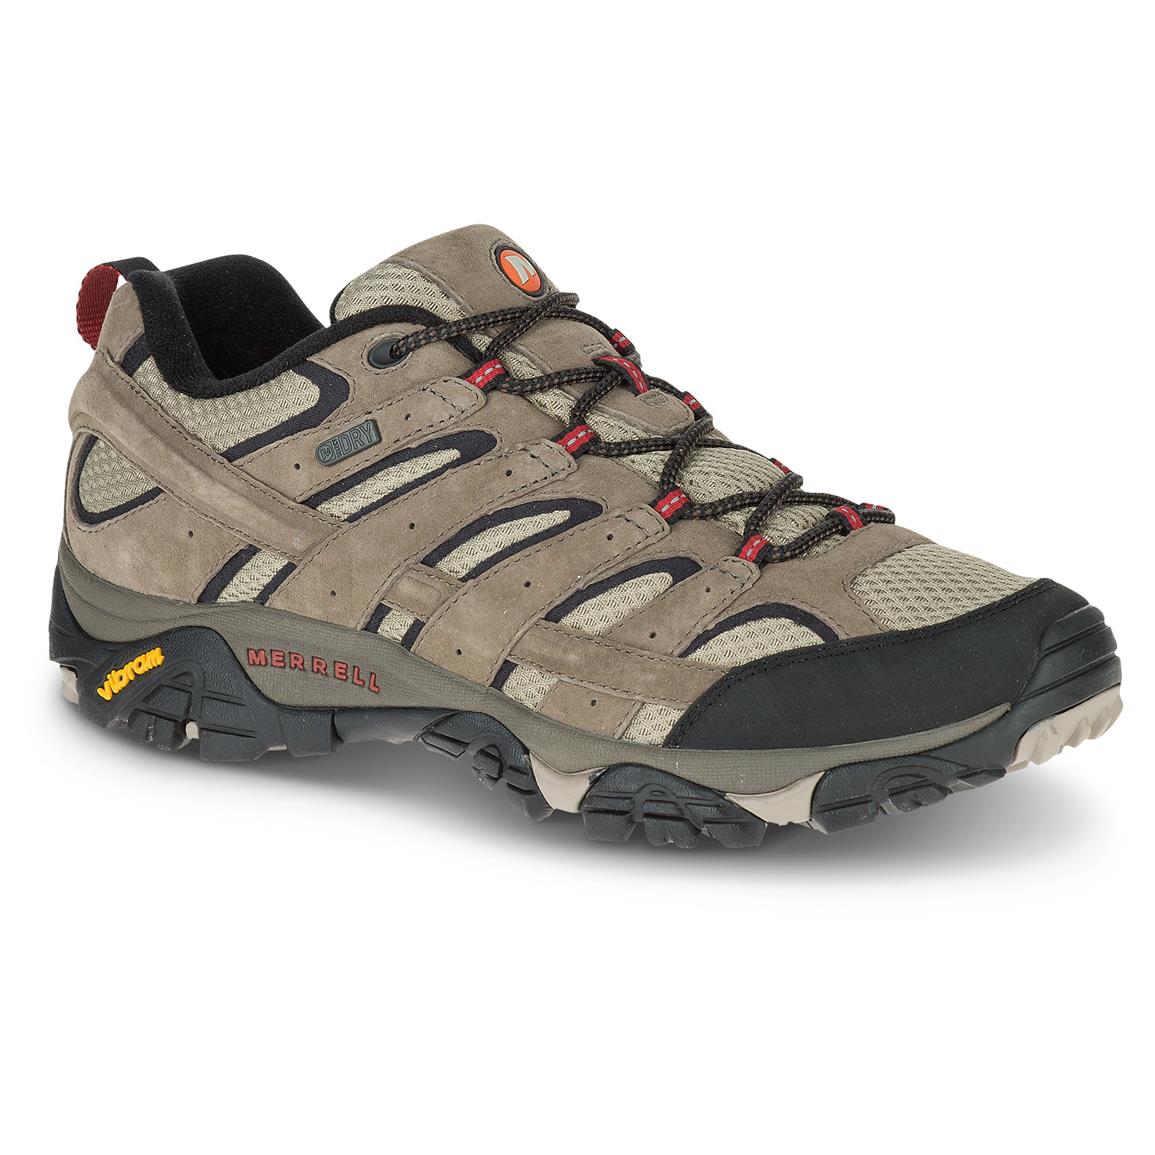 Merrell Men's Moab 2 Waterproof Hiking Shoes, bark brown